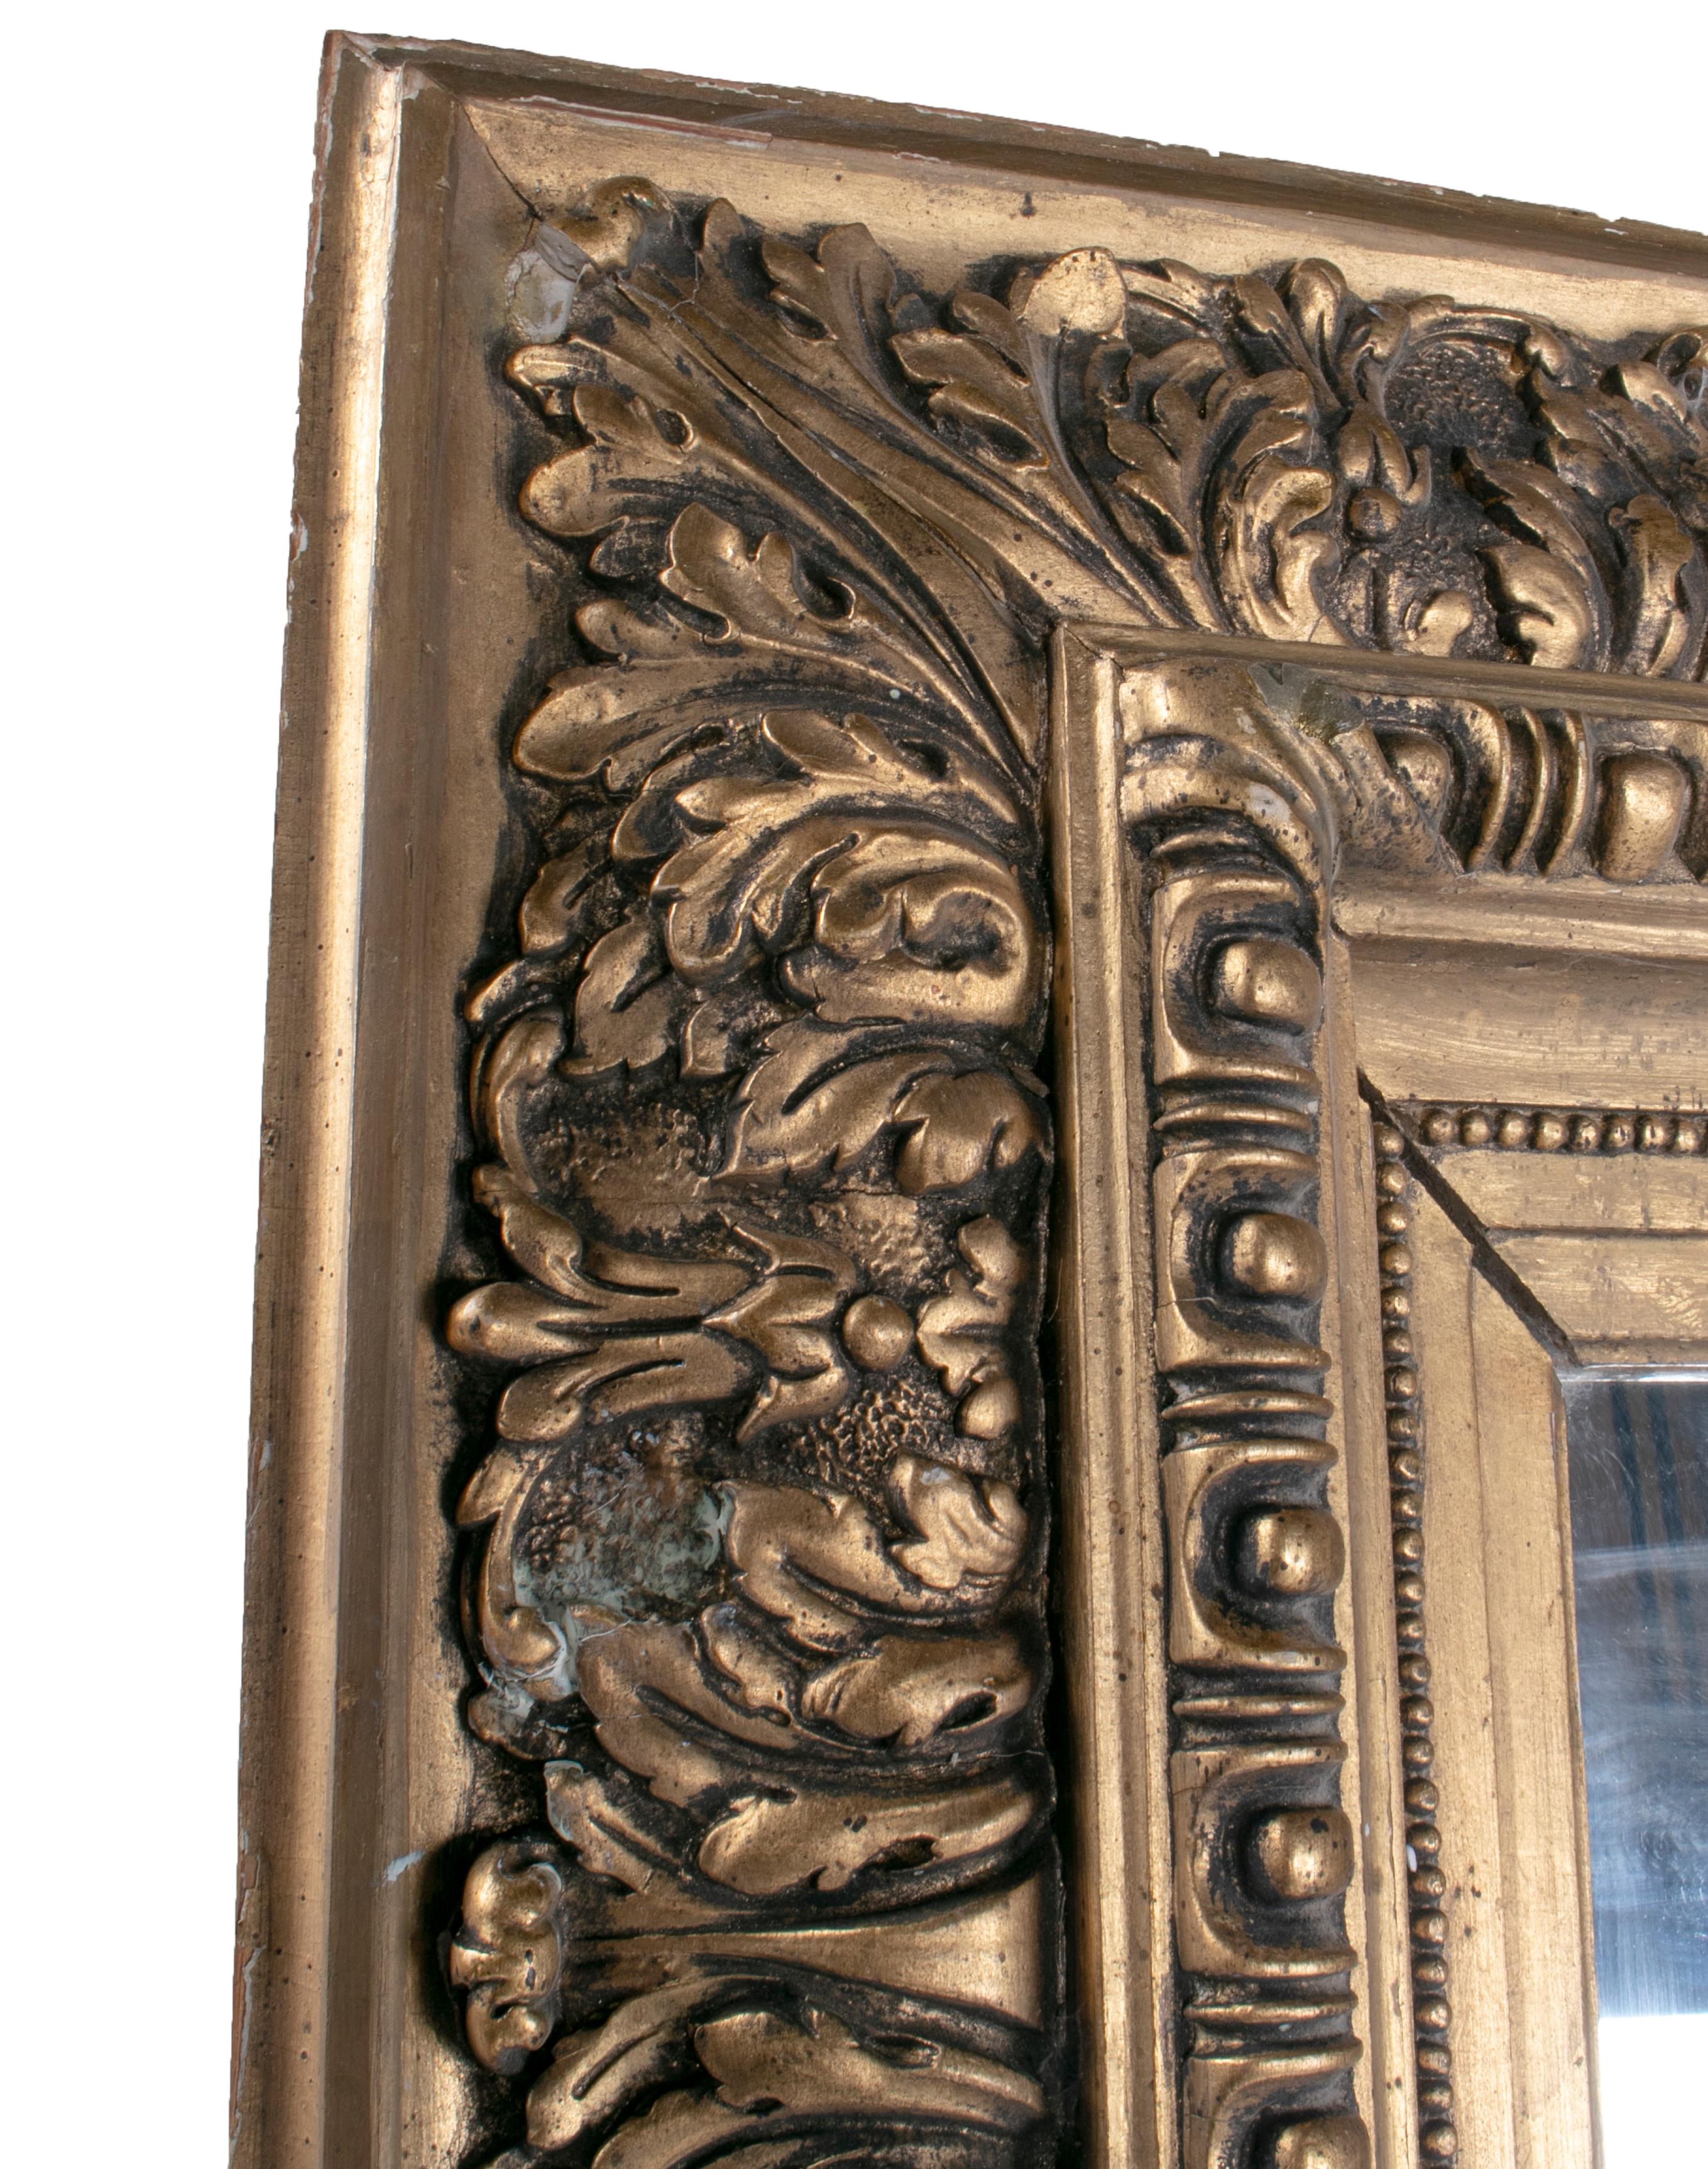 Late 19th century Spanish rectangular mirror with ornamental gilded frame.